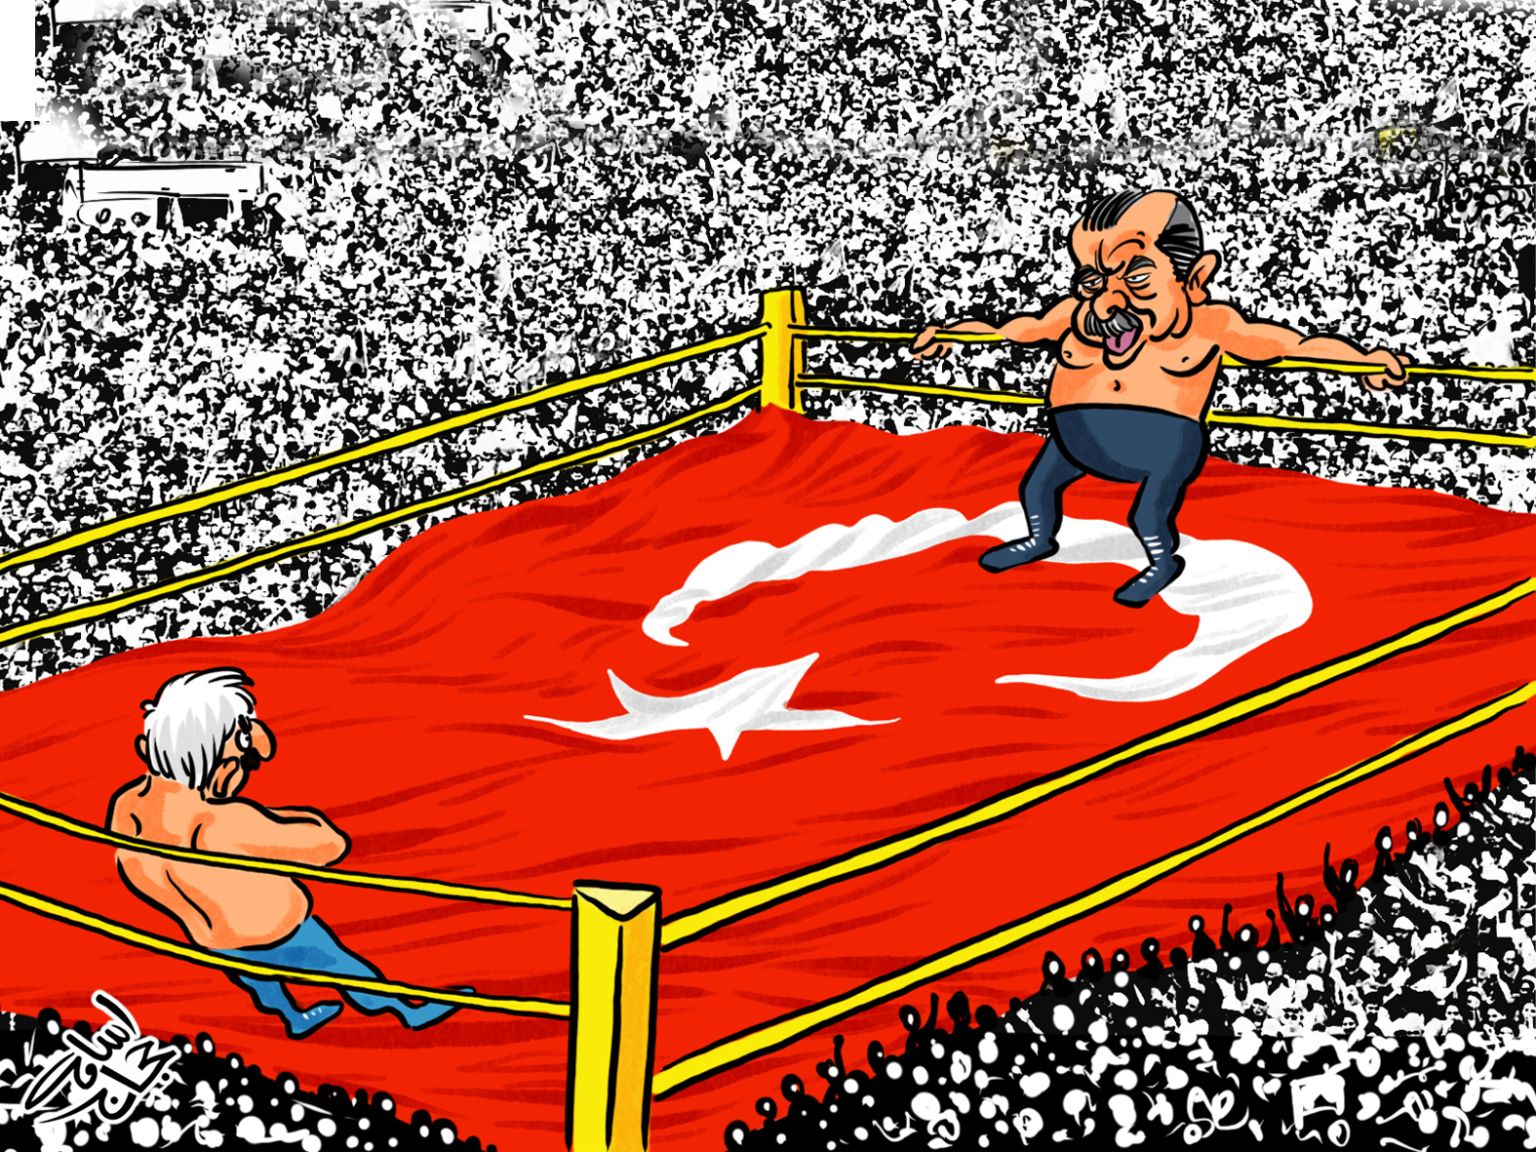 newsjustin.press - TURKEY Presidential campaign - political cartoon